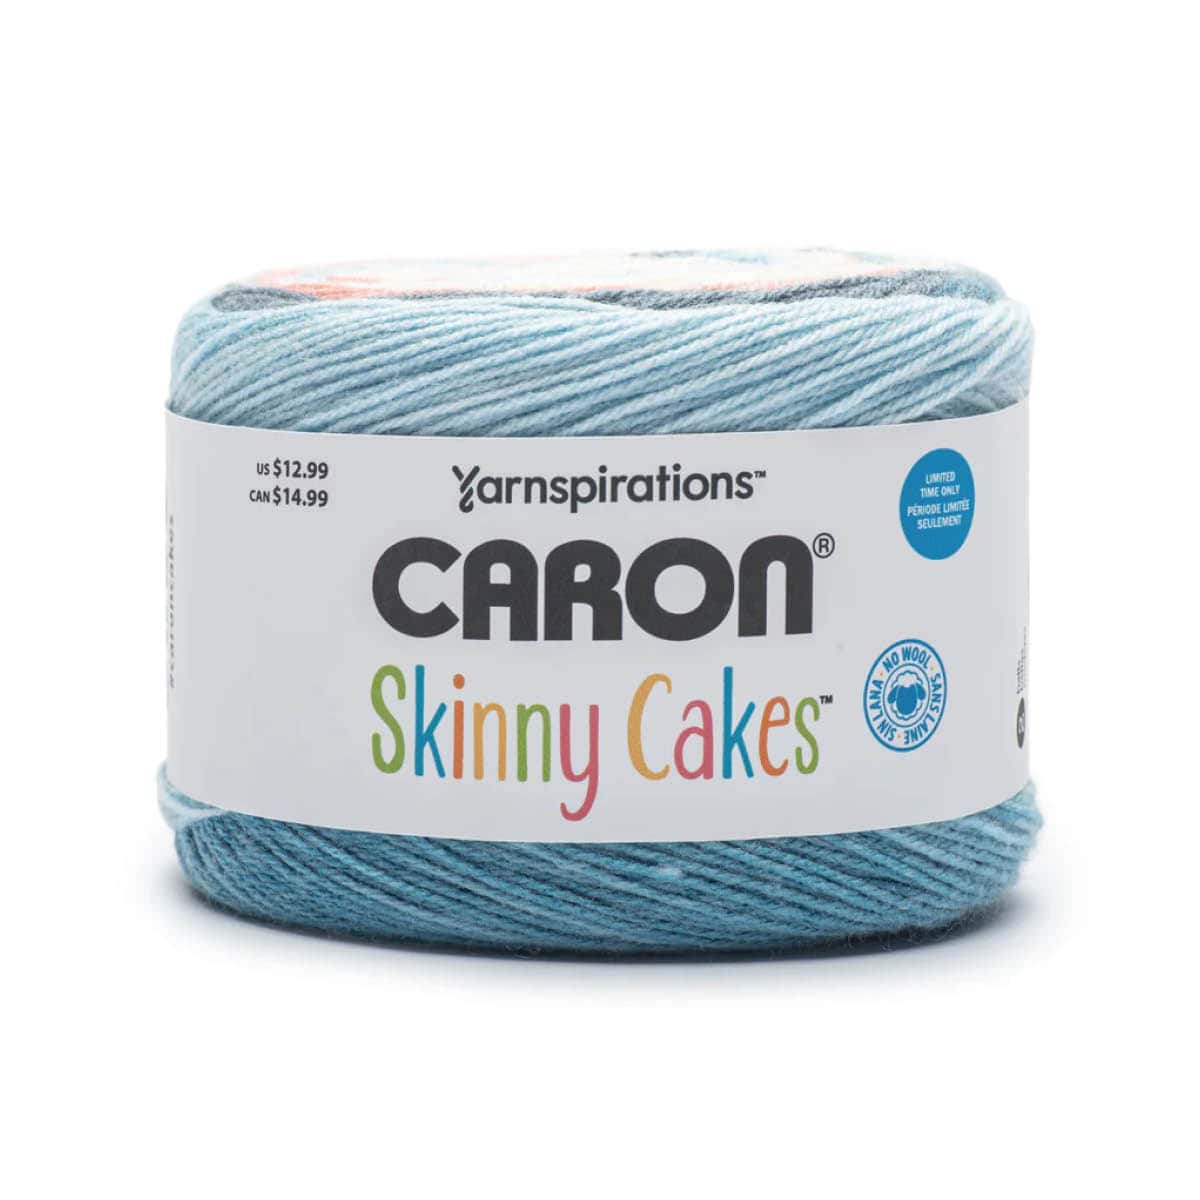 Caron Skinny Cakes Product